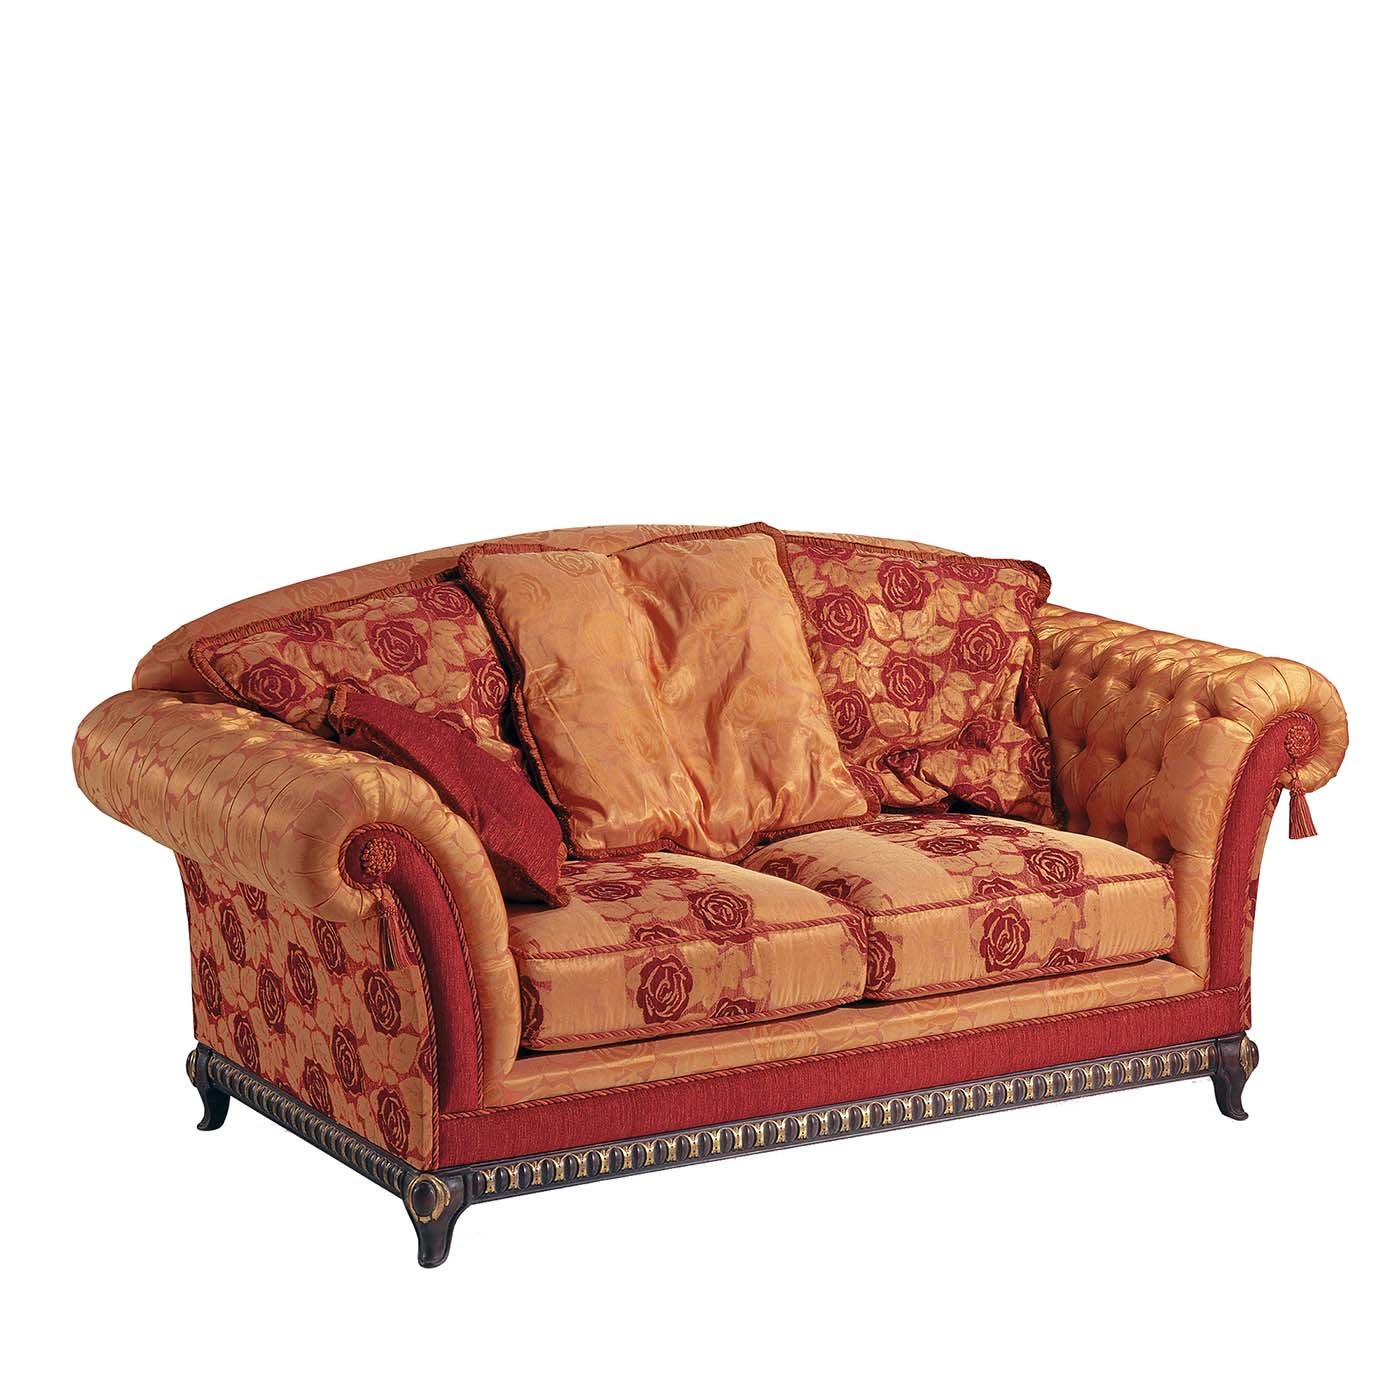 Red and Bronze Sofa - Modenese Gastone